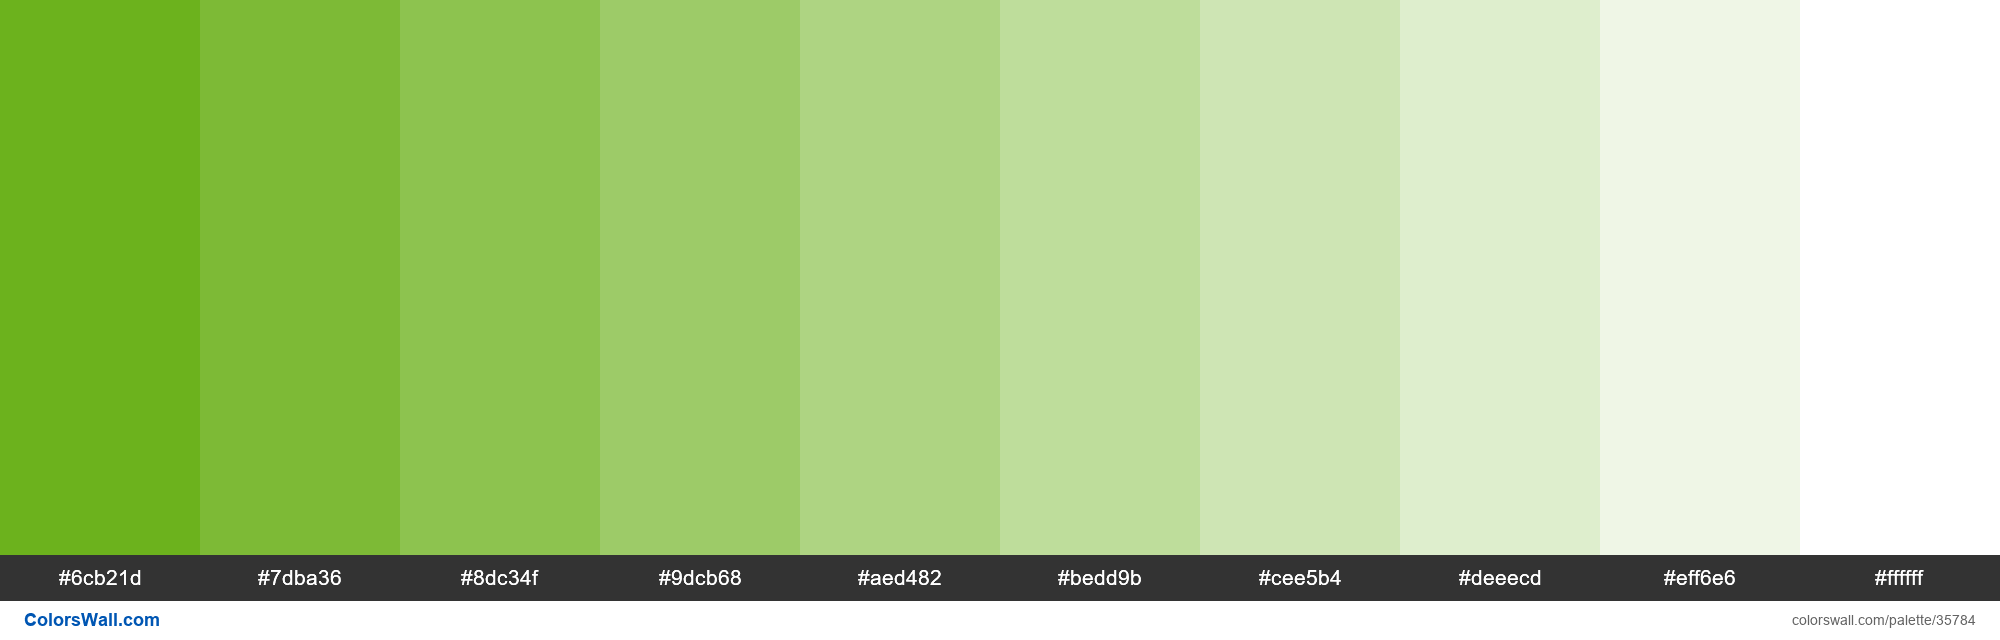 leaf green  Color Palette Ideas